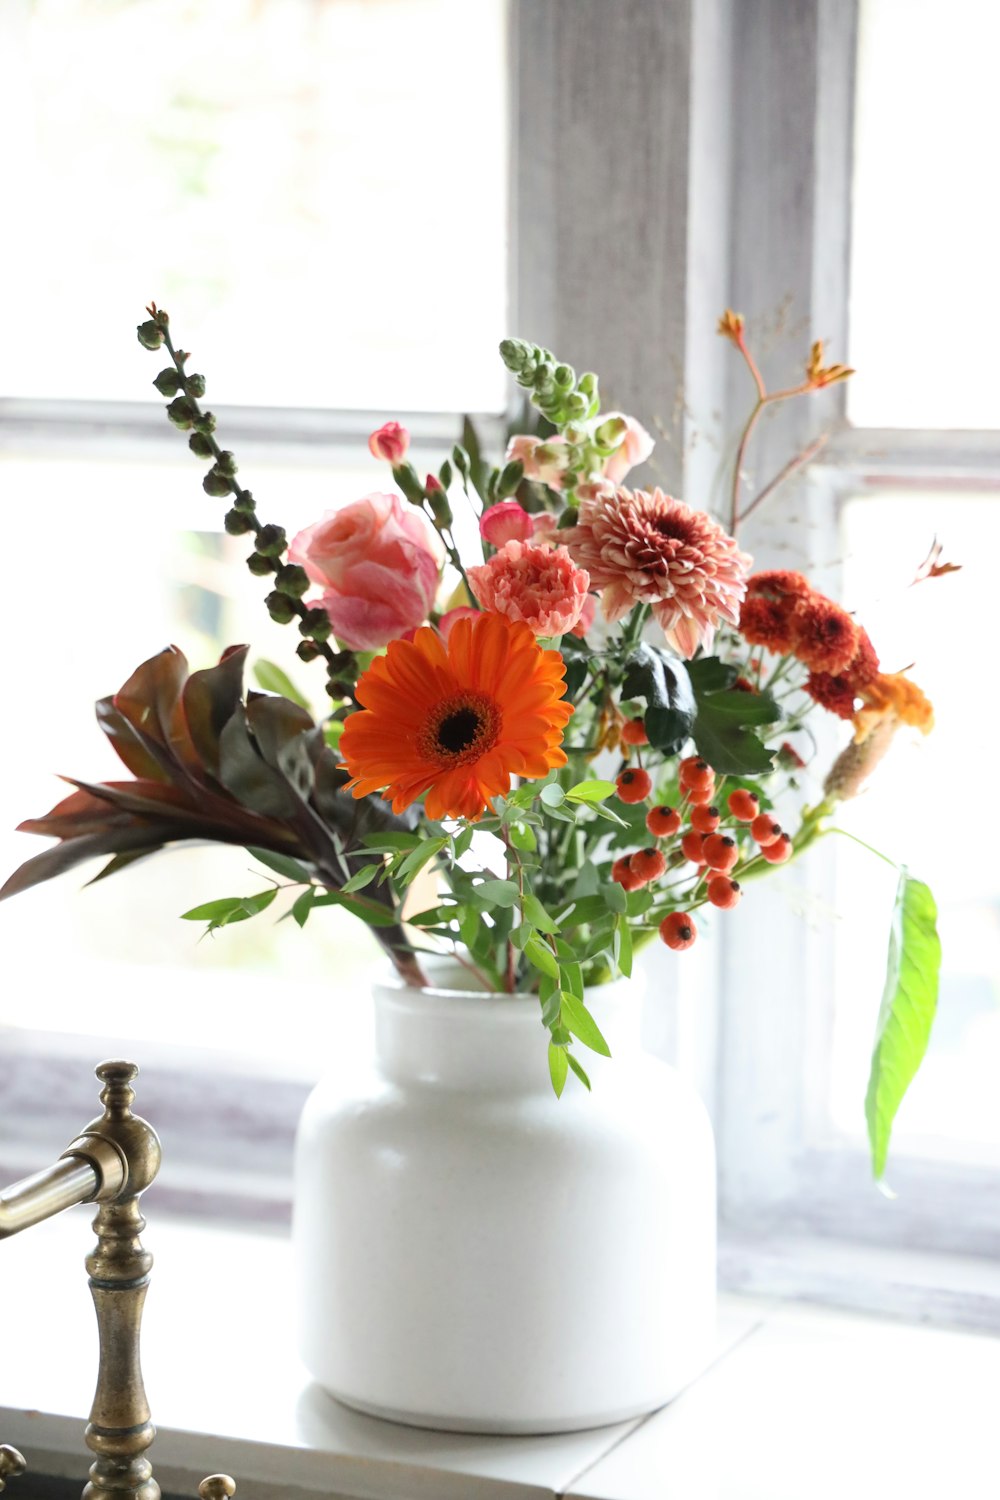 flower arrangement in vase on window